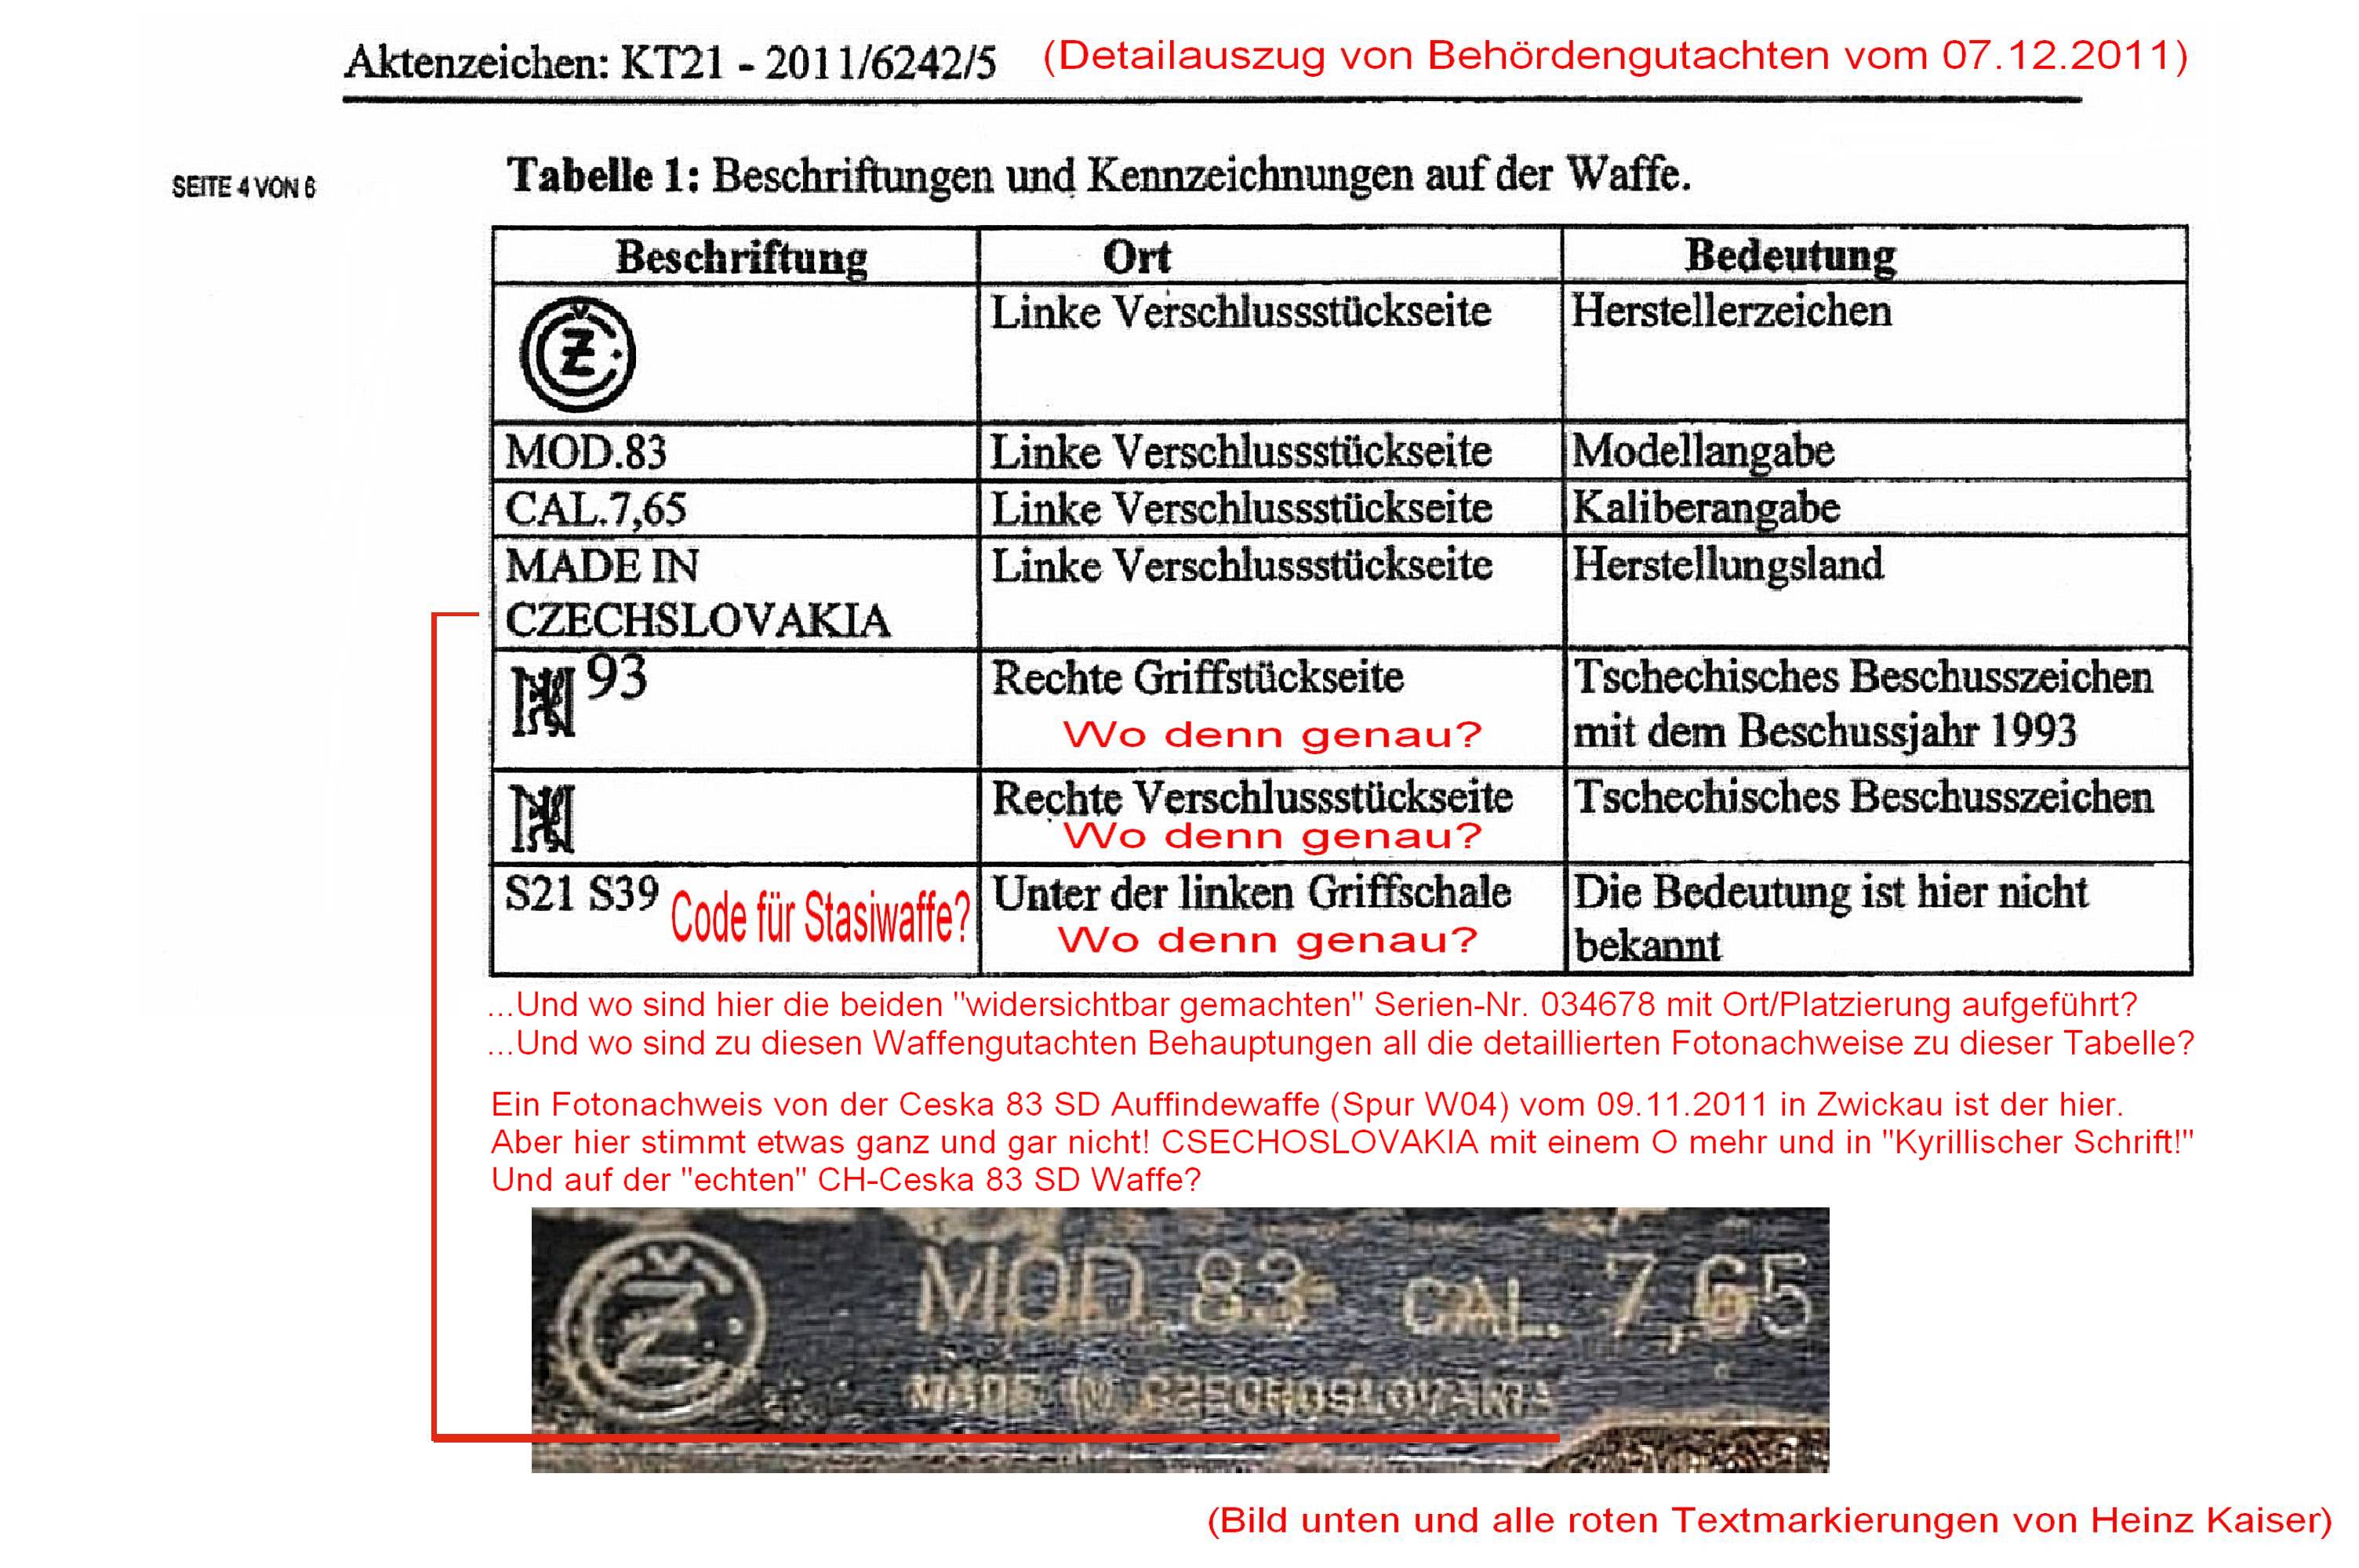 04-ceska-tabelle-von-behoerdengutachten-vom-07-12-2011-fotogroesse